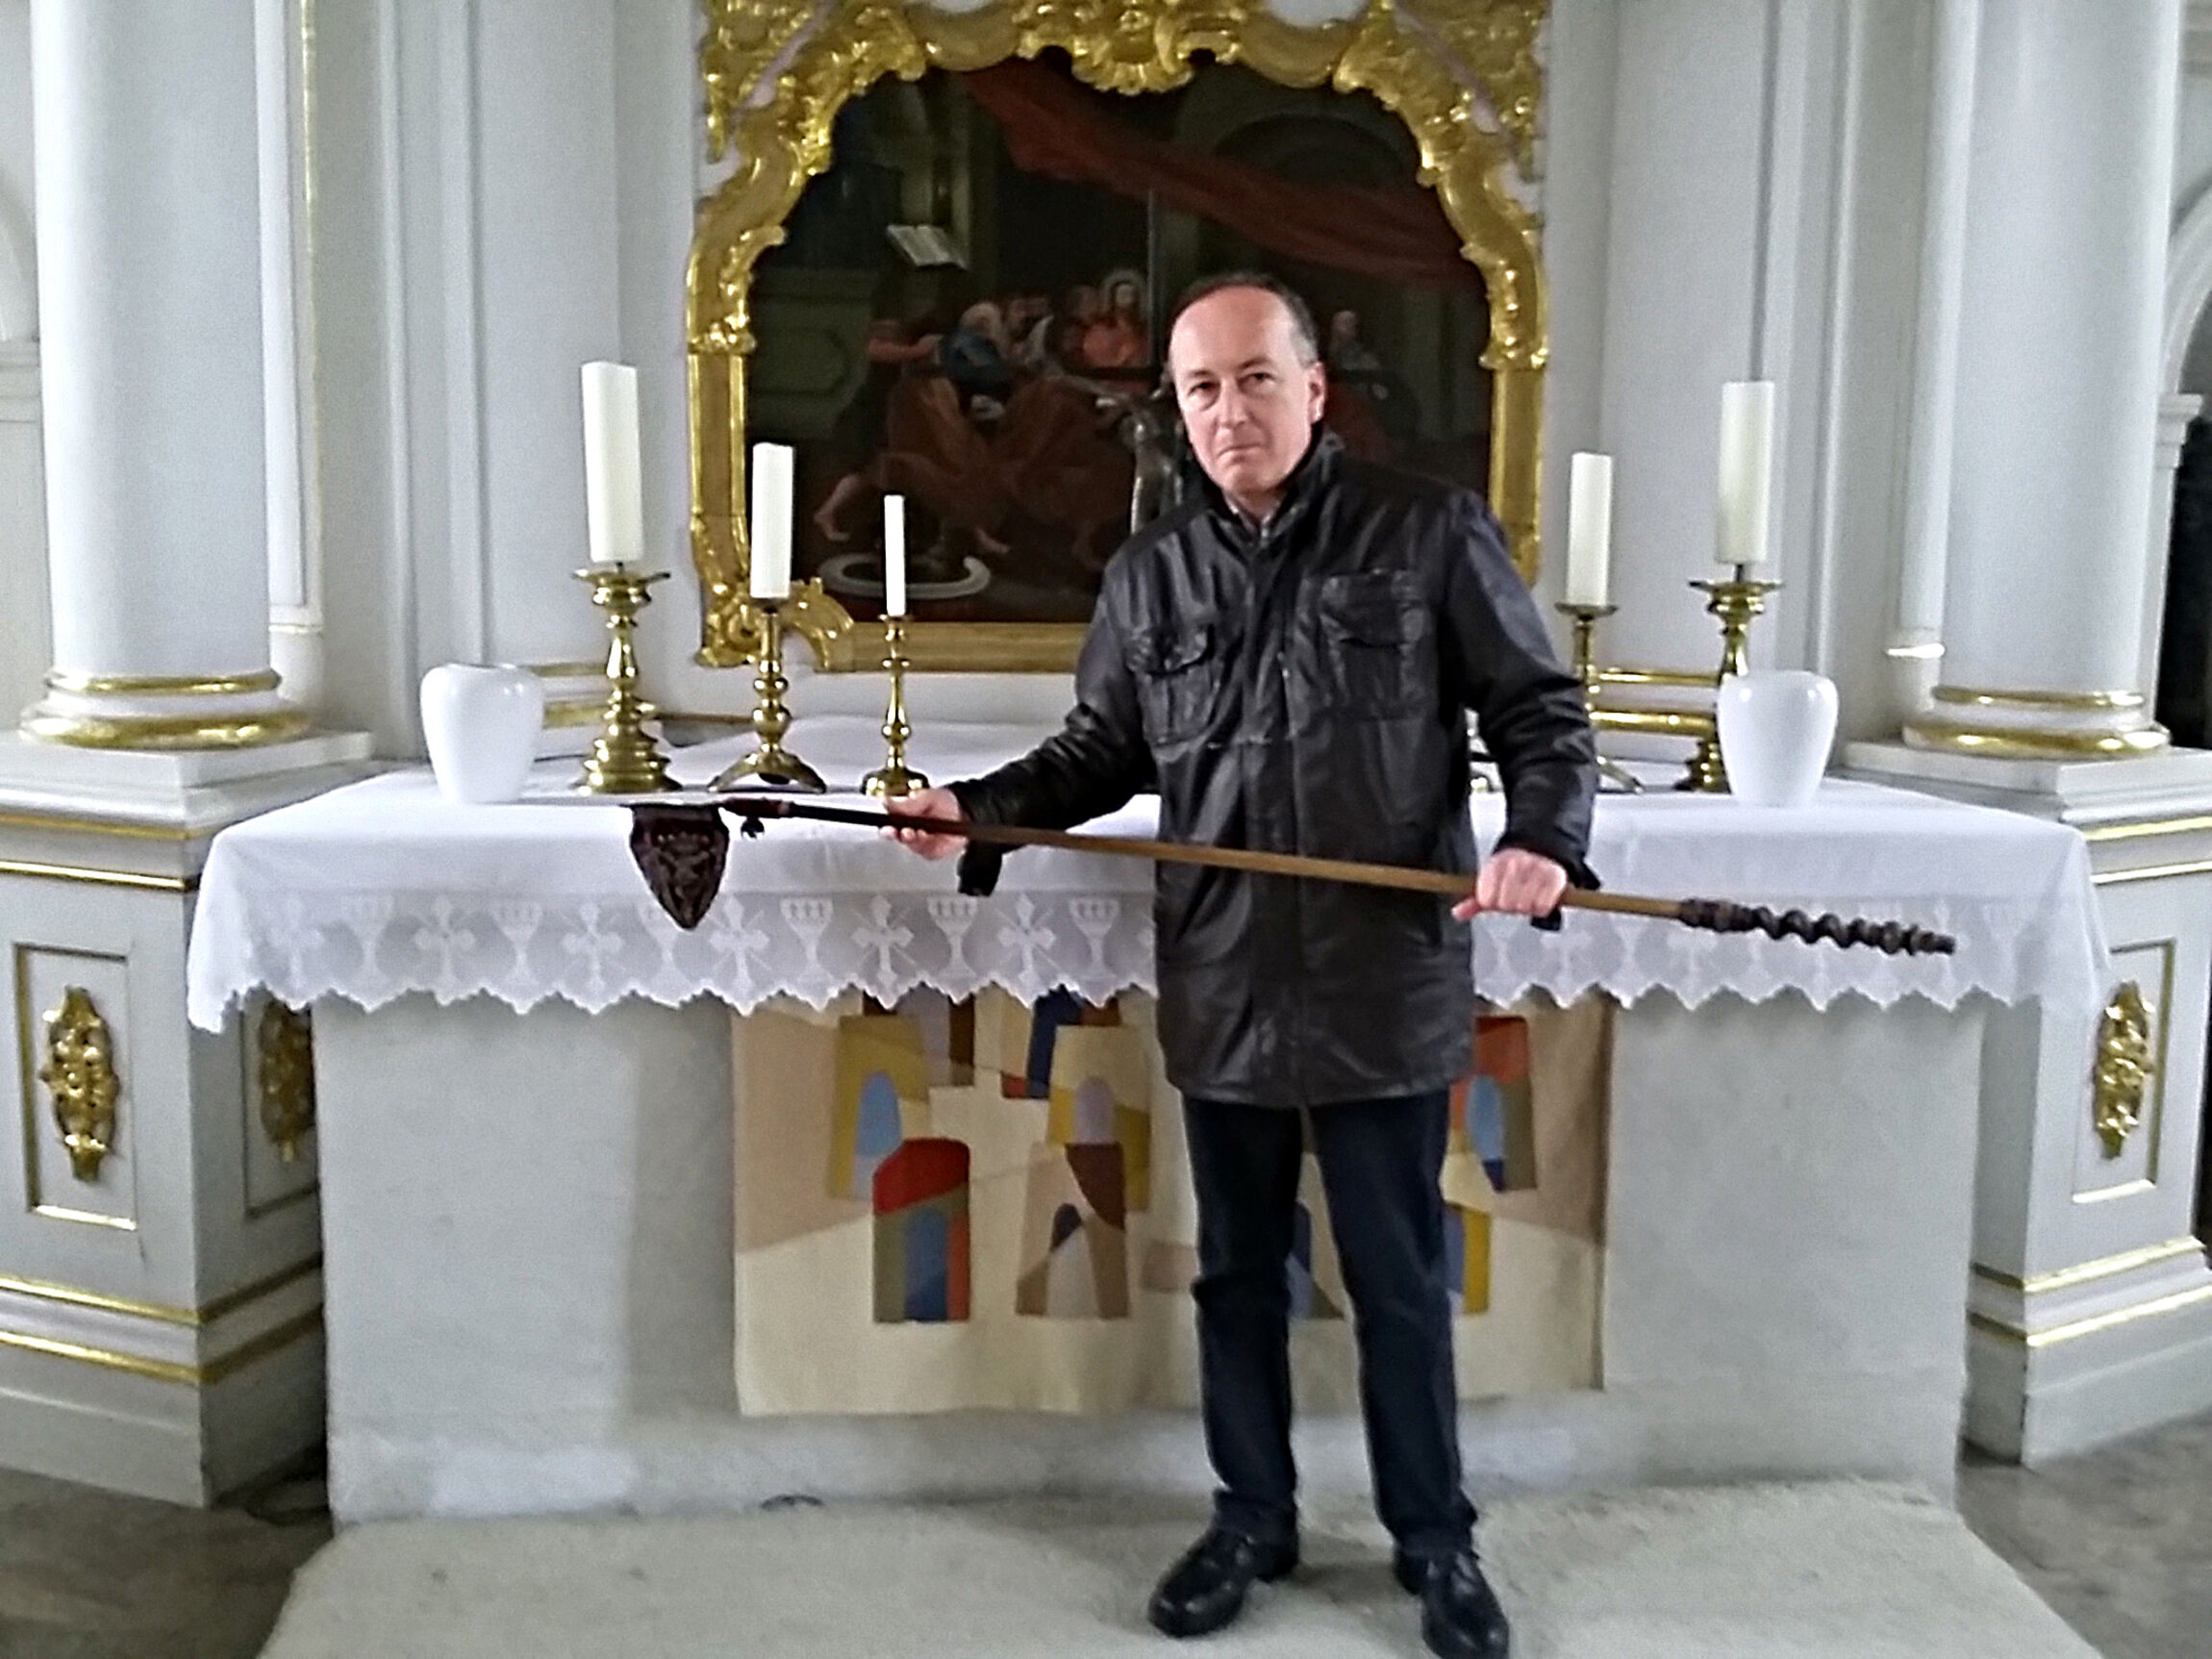 Dr. Thorsten Albrecht mit dem prächtigen Klingelbeutel in der Kirche in Kolenfeld / Foto: Lars Werner